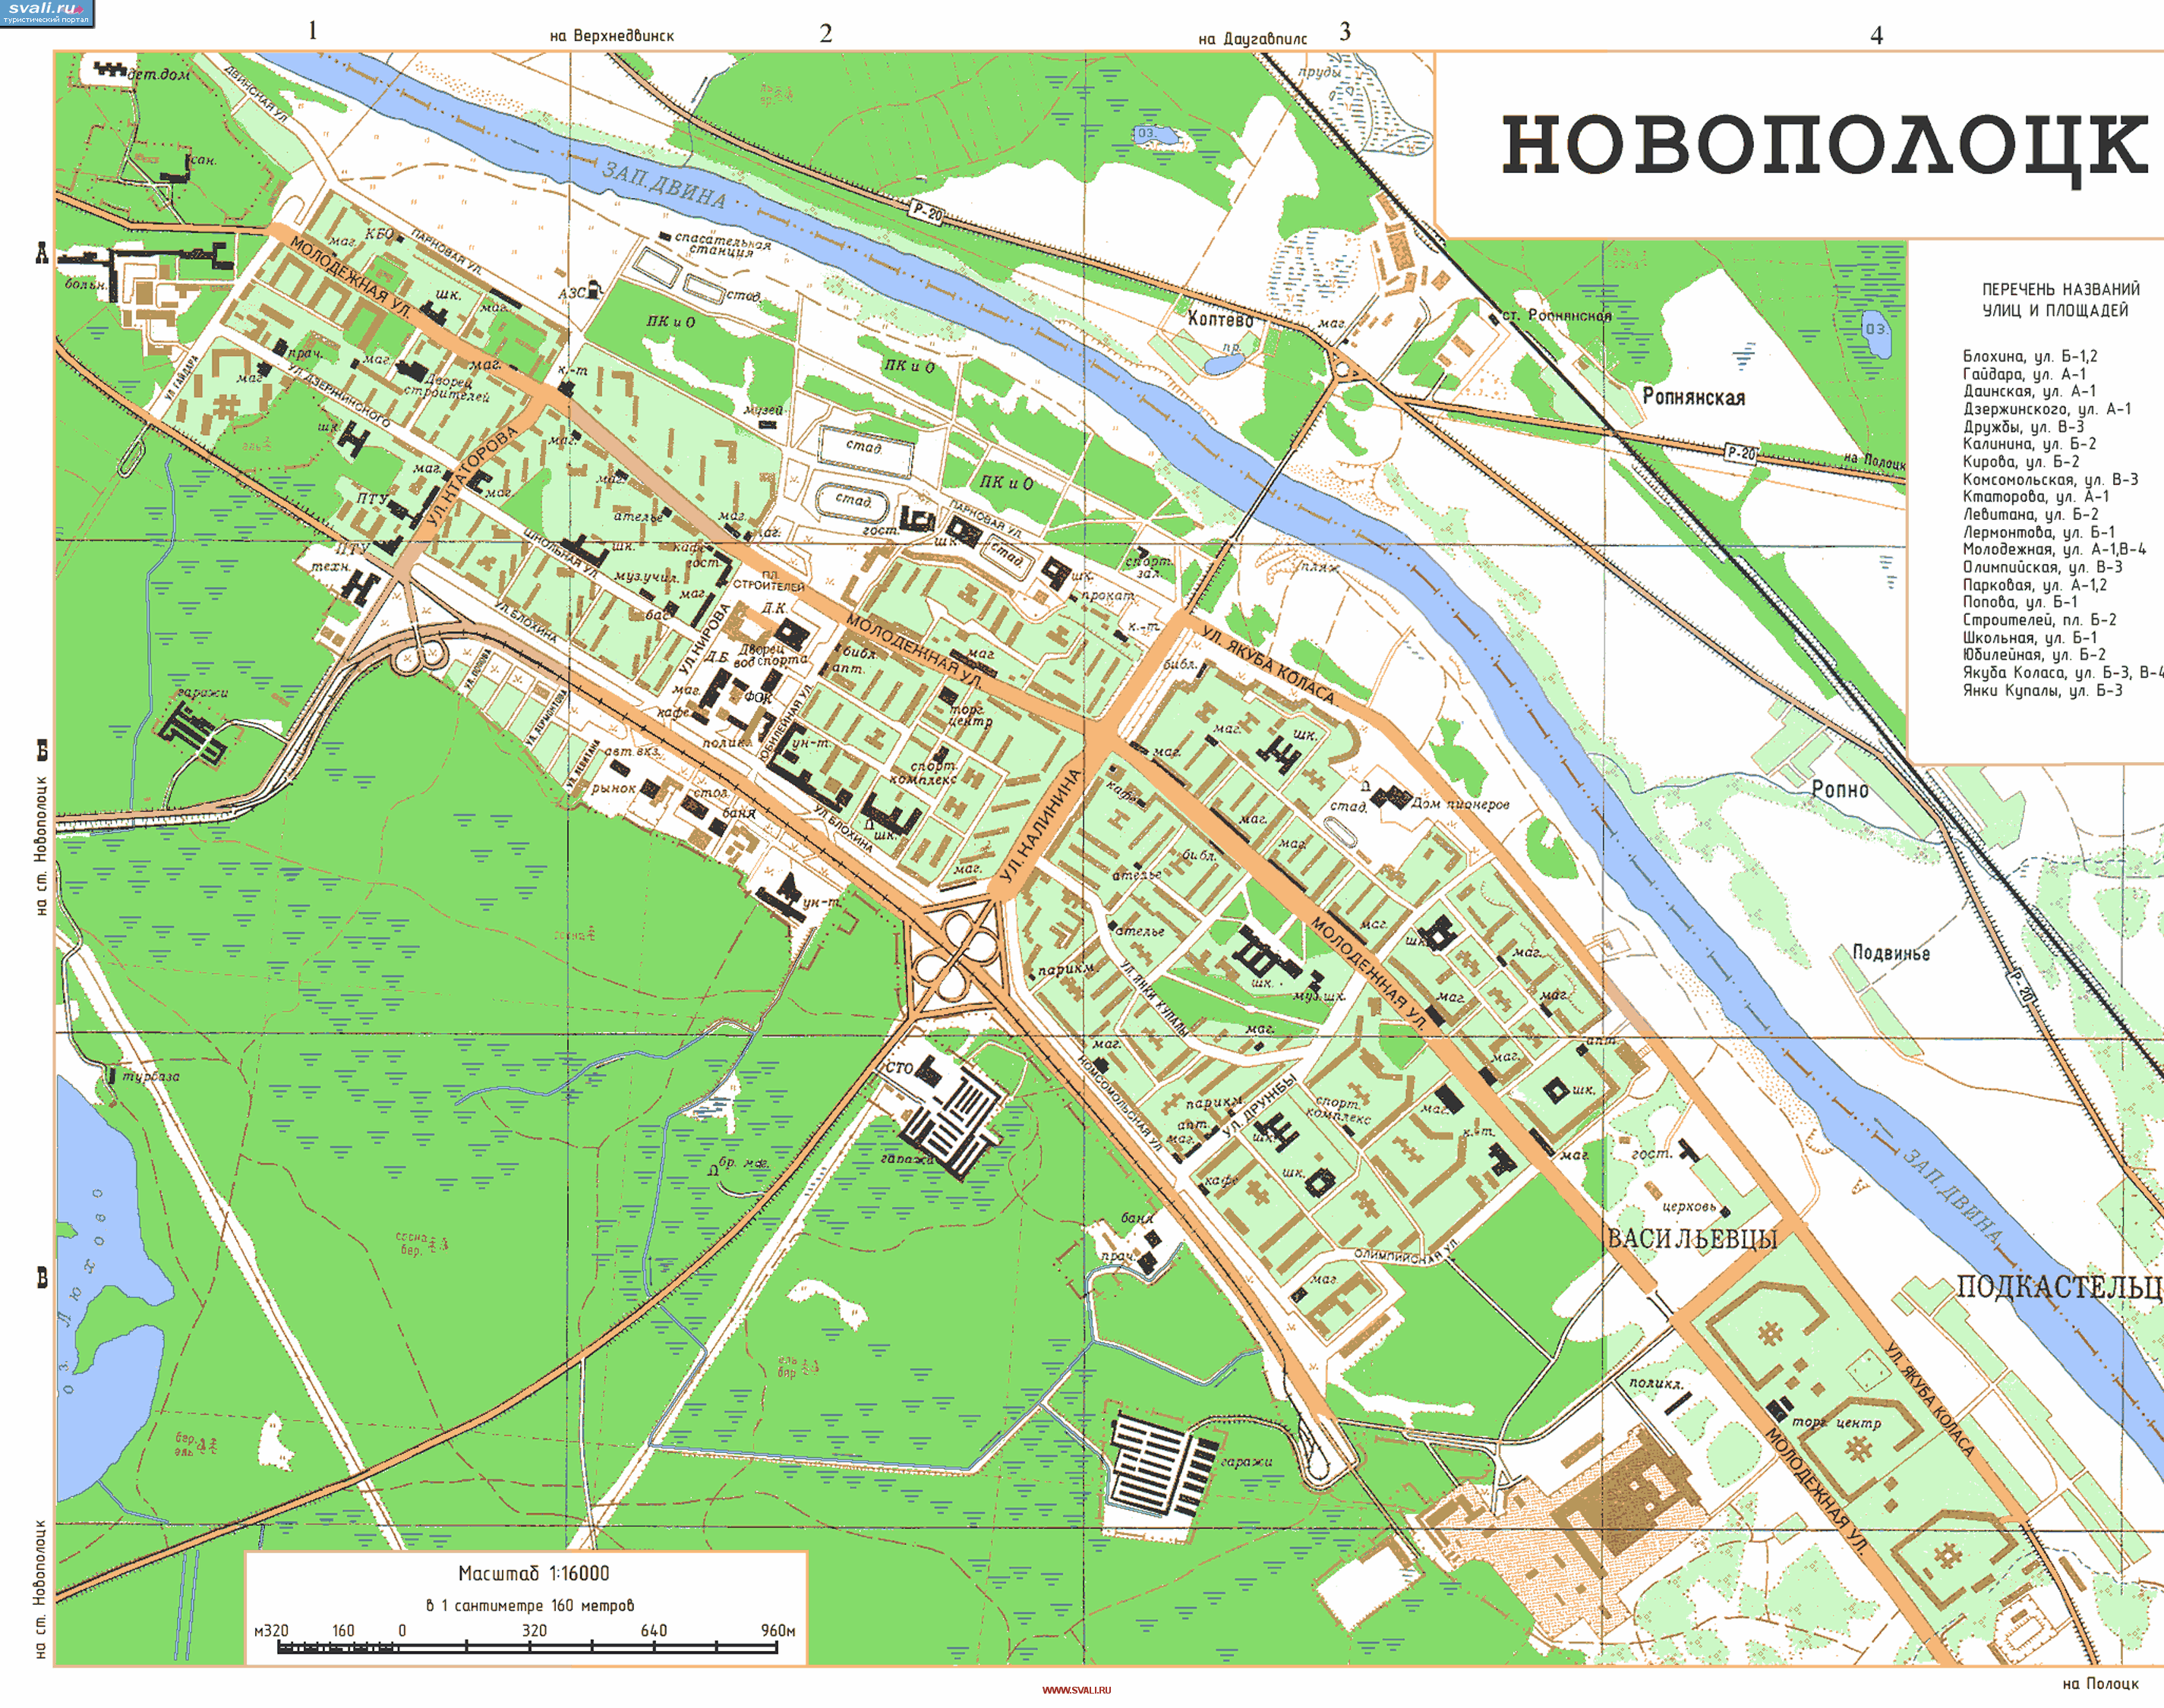 Карта Новополоцка, Белоруссия.